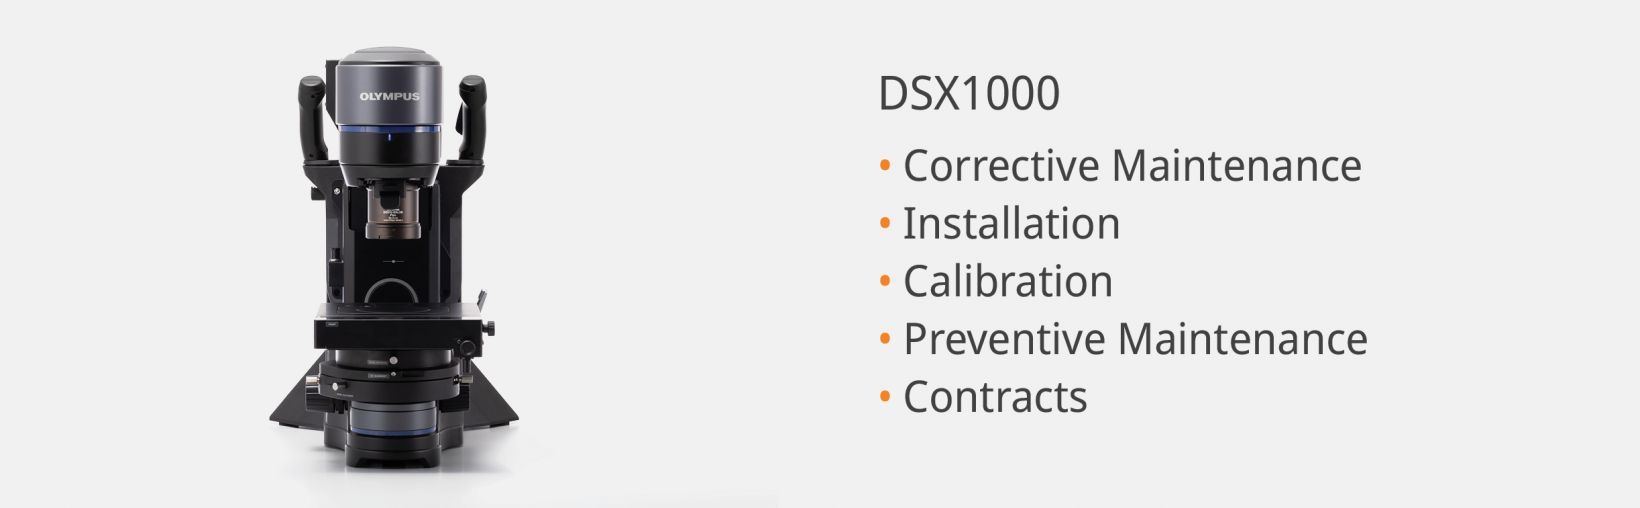 DSX1000